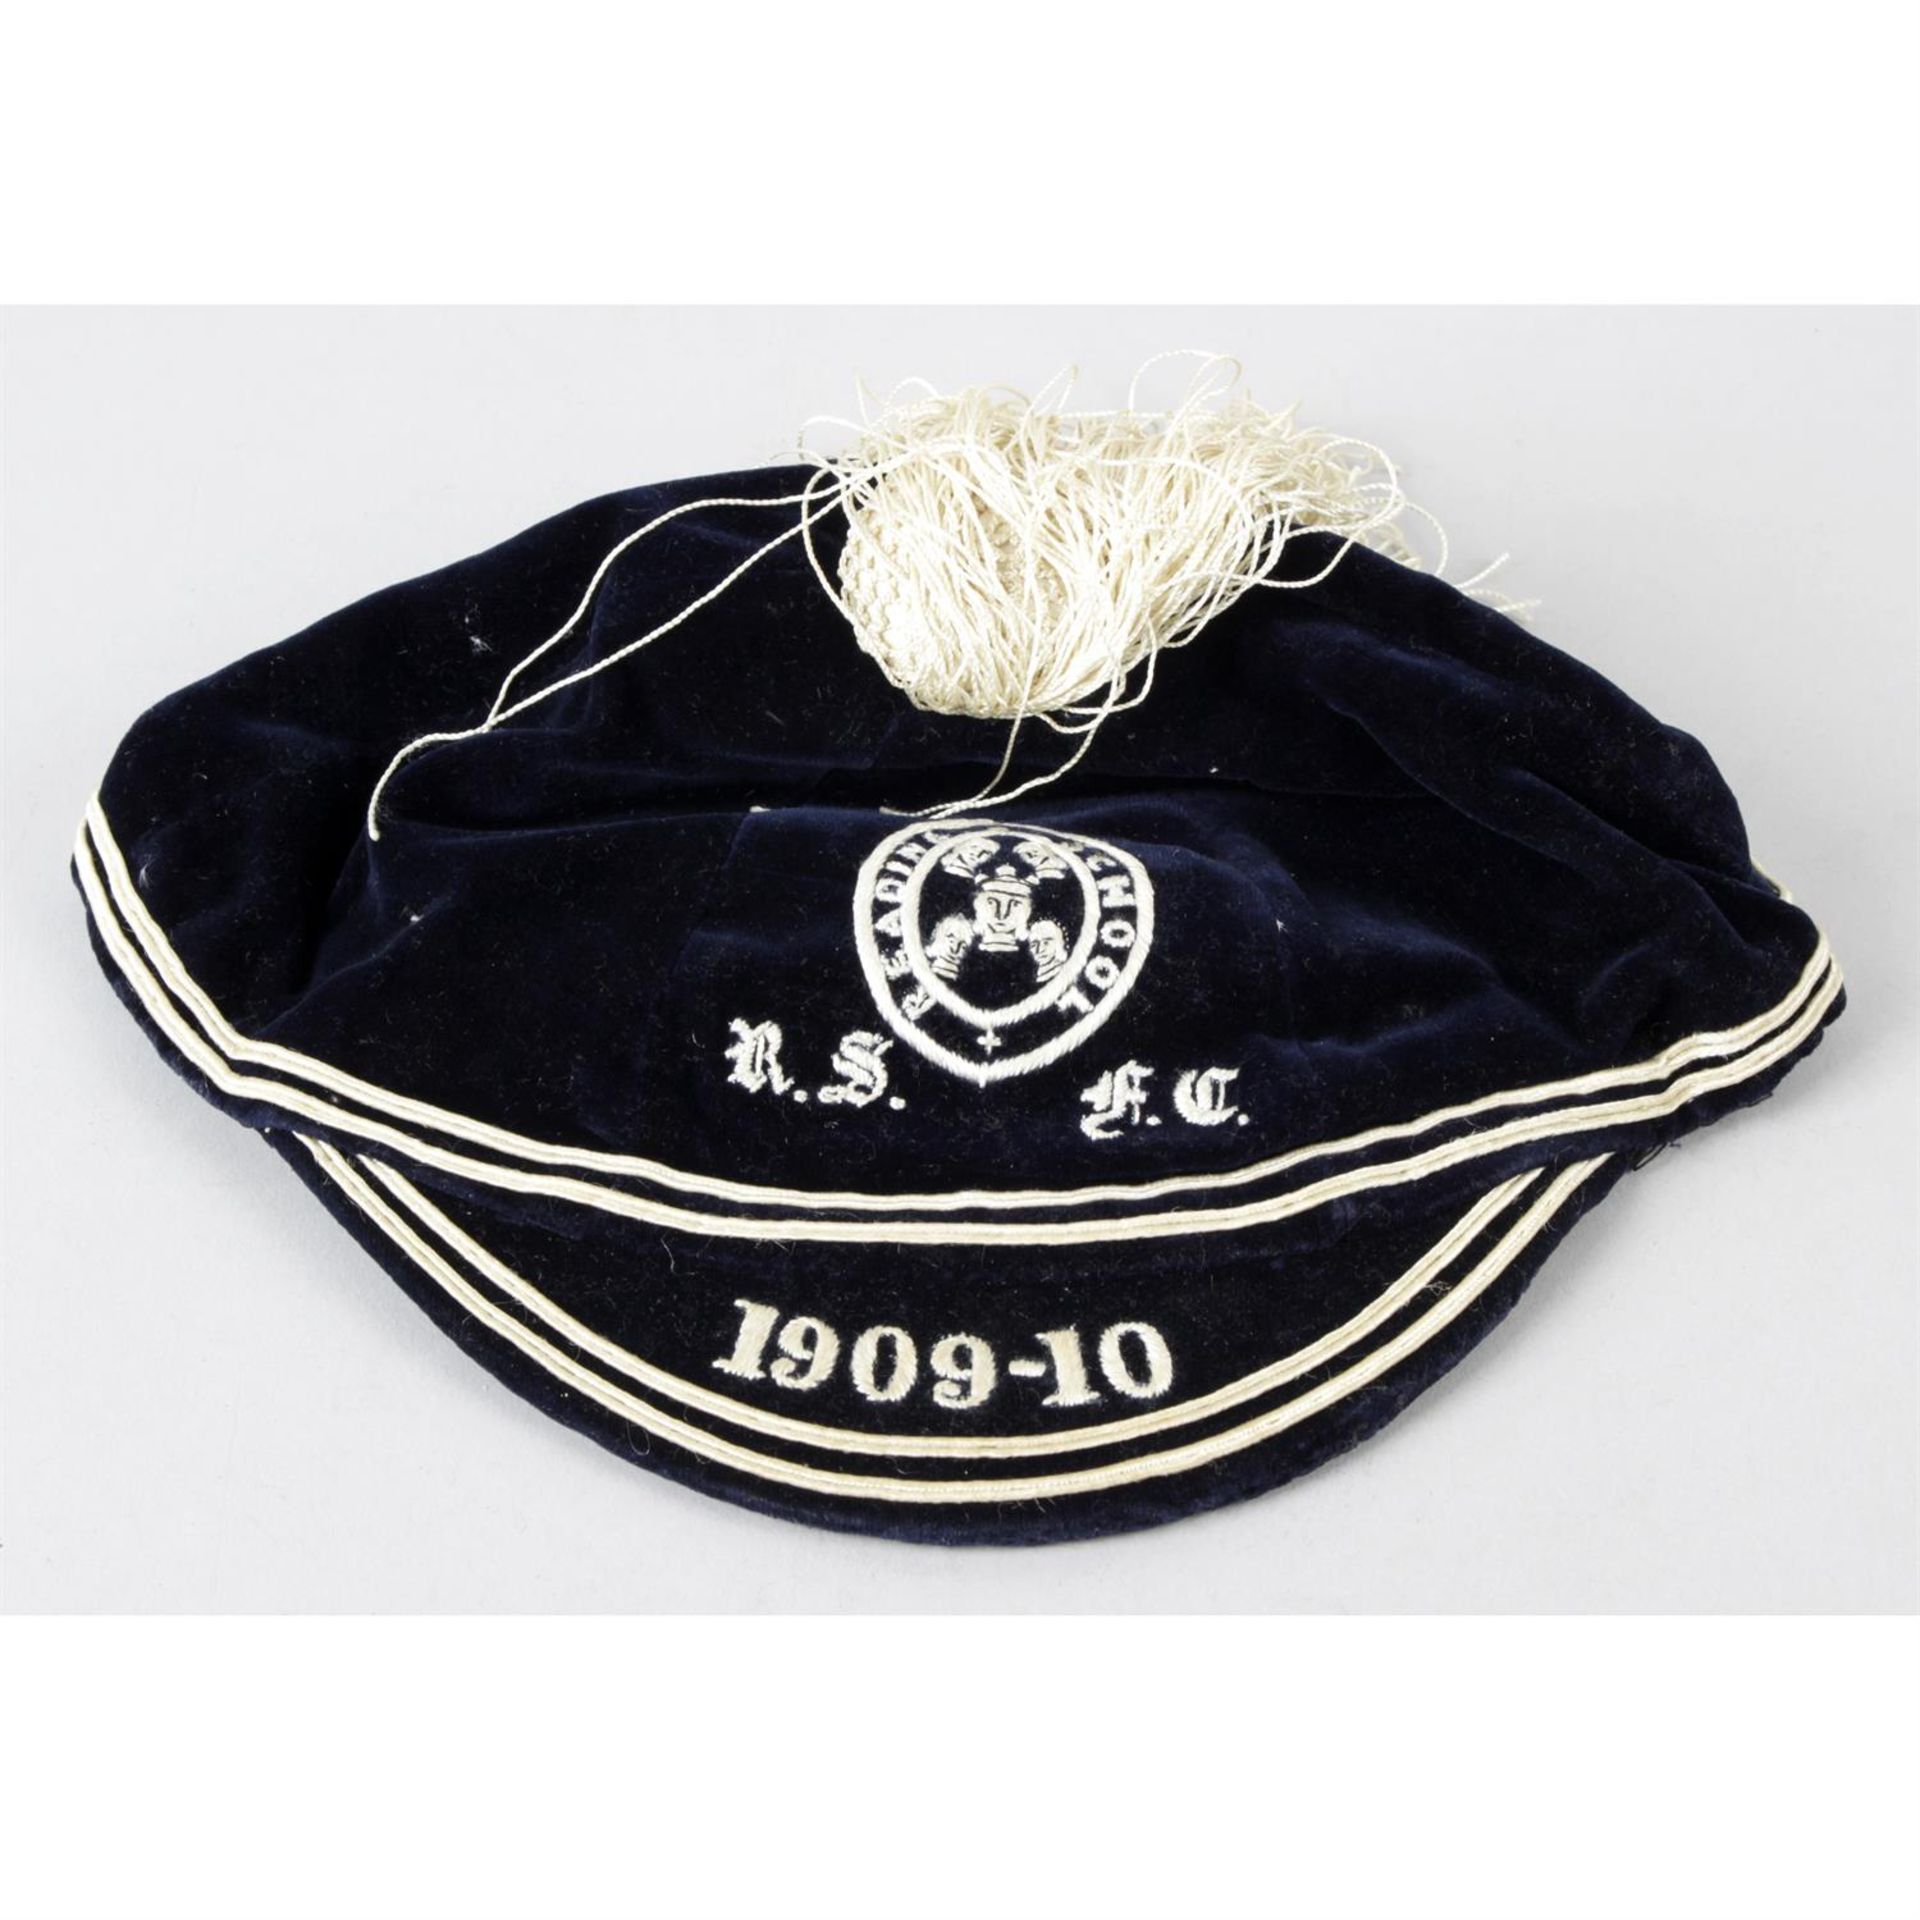 A 1909-1910 Reading School blue velvet cloth cap.